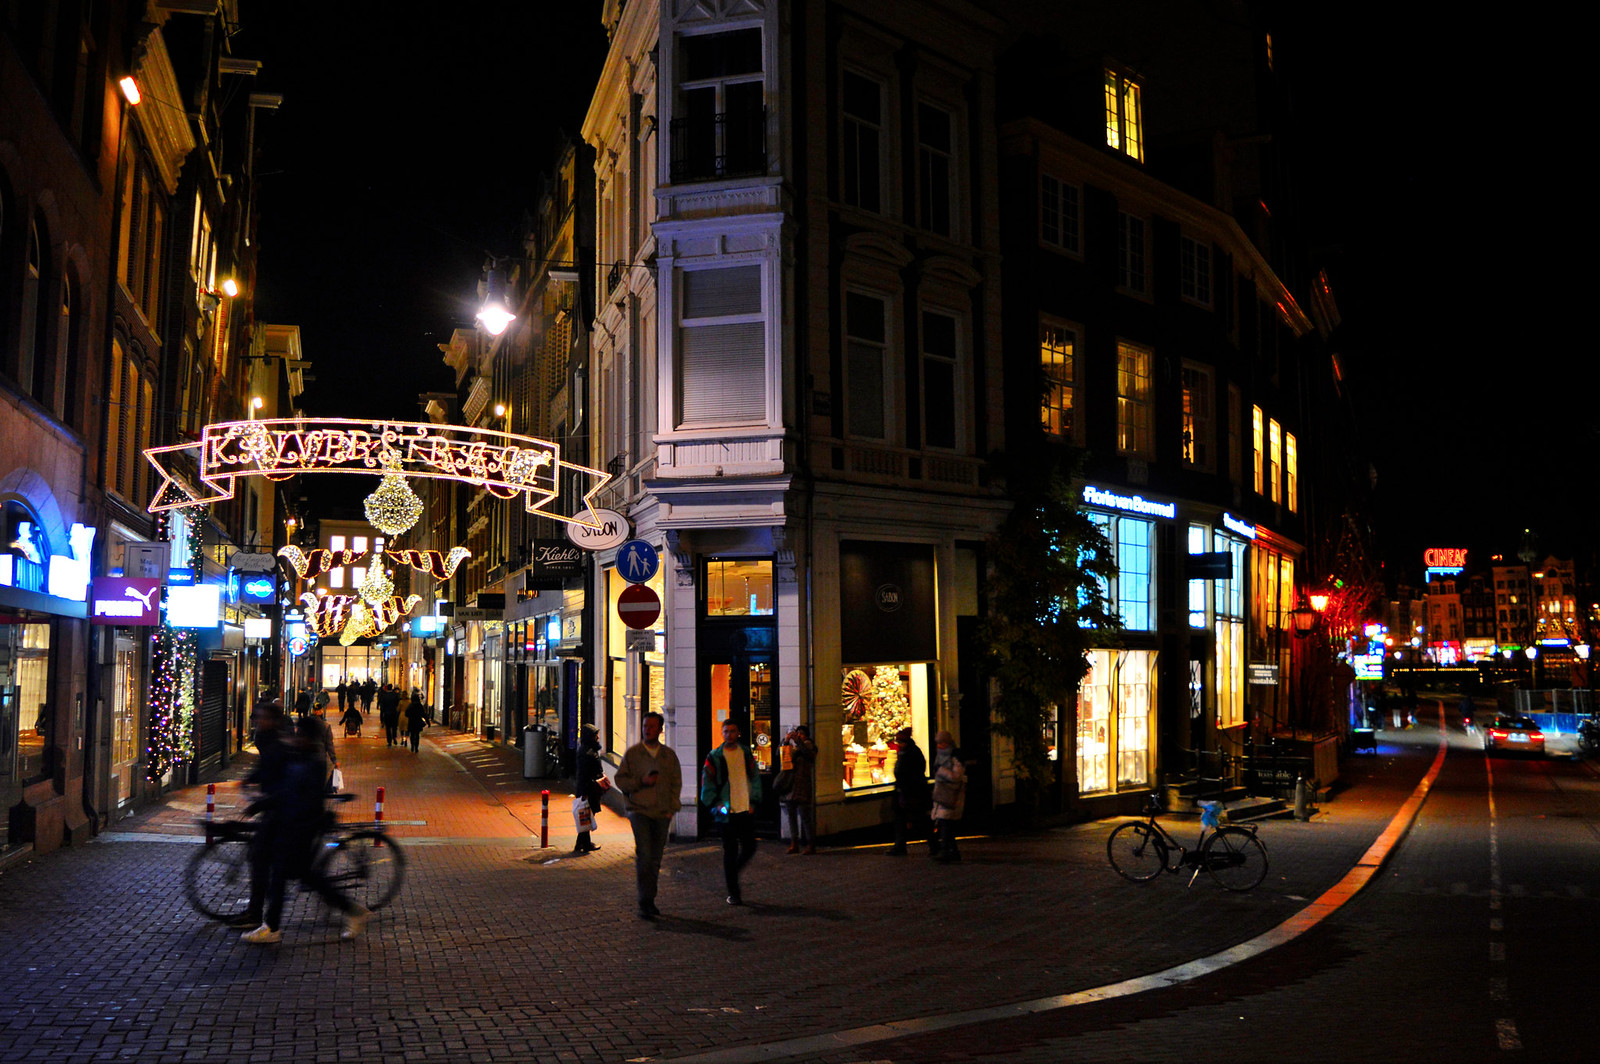 Kalverstraat in December